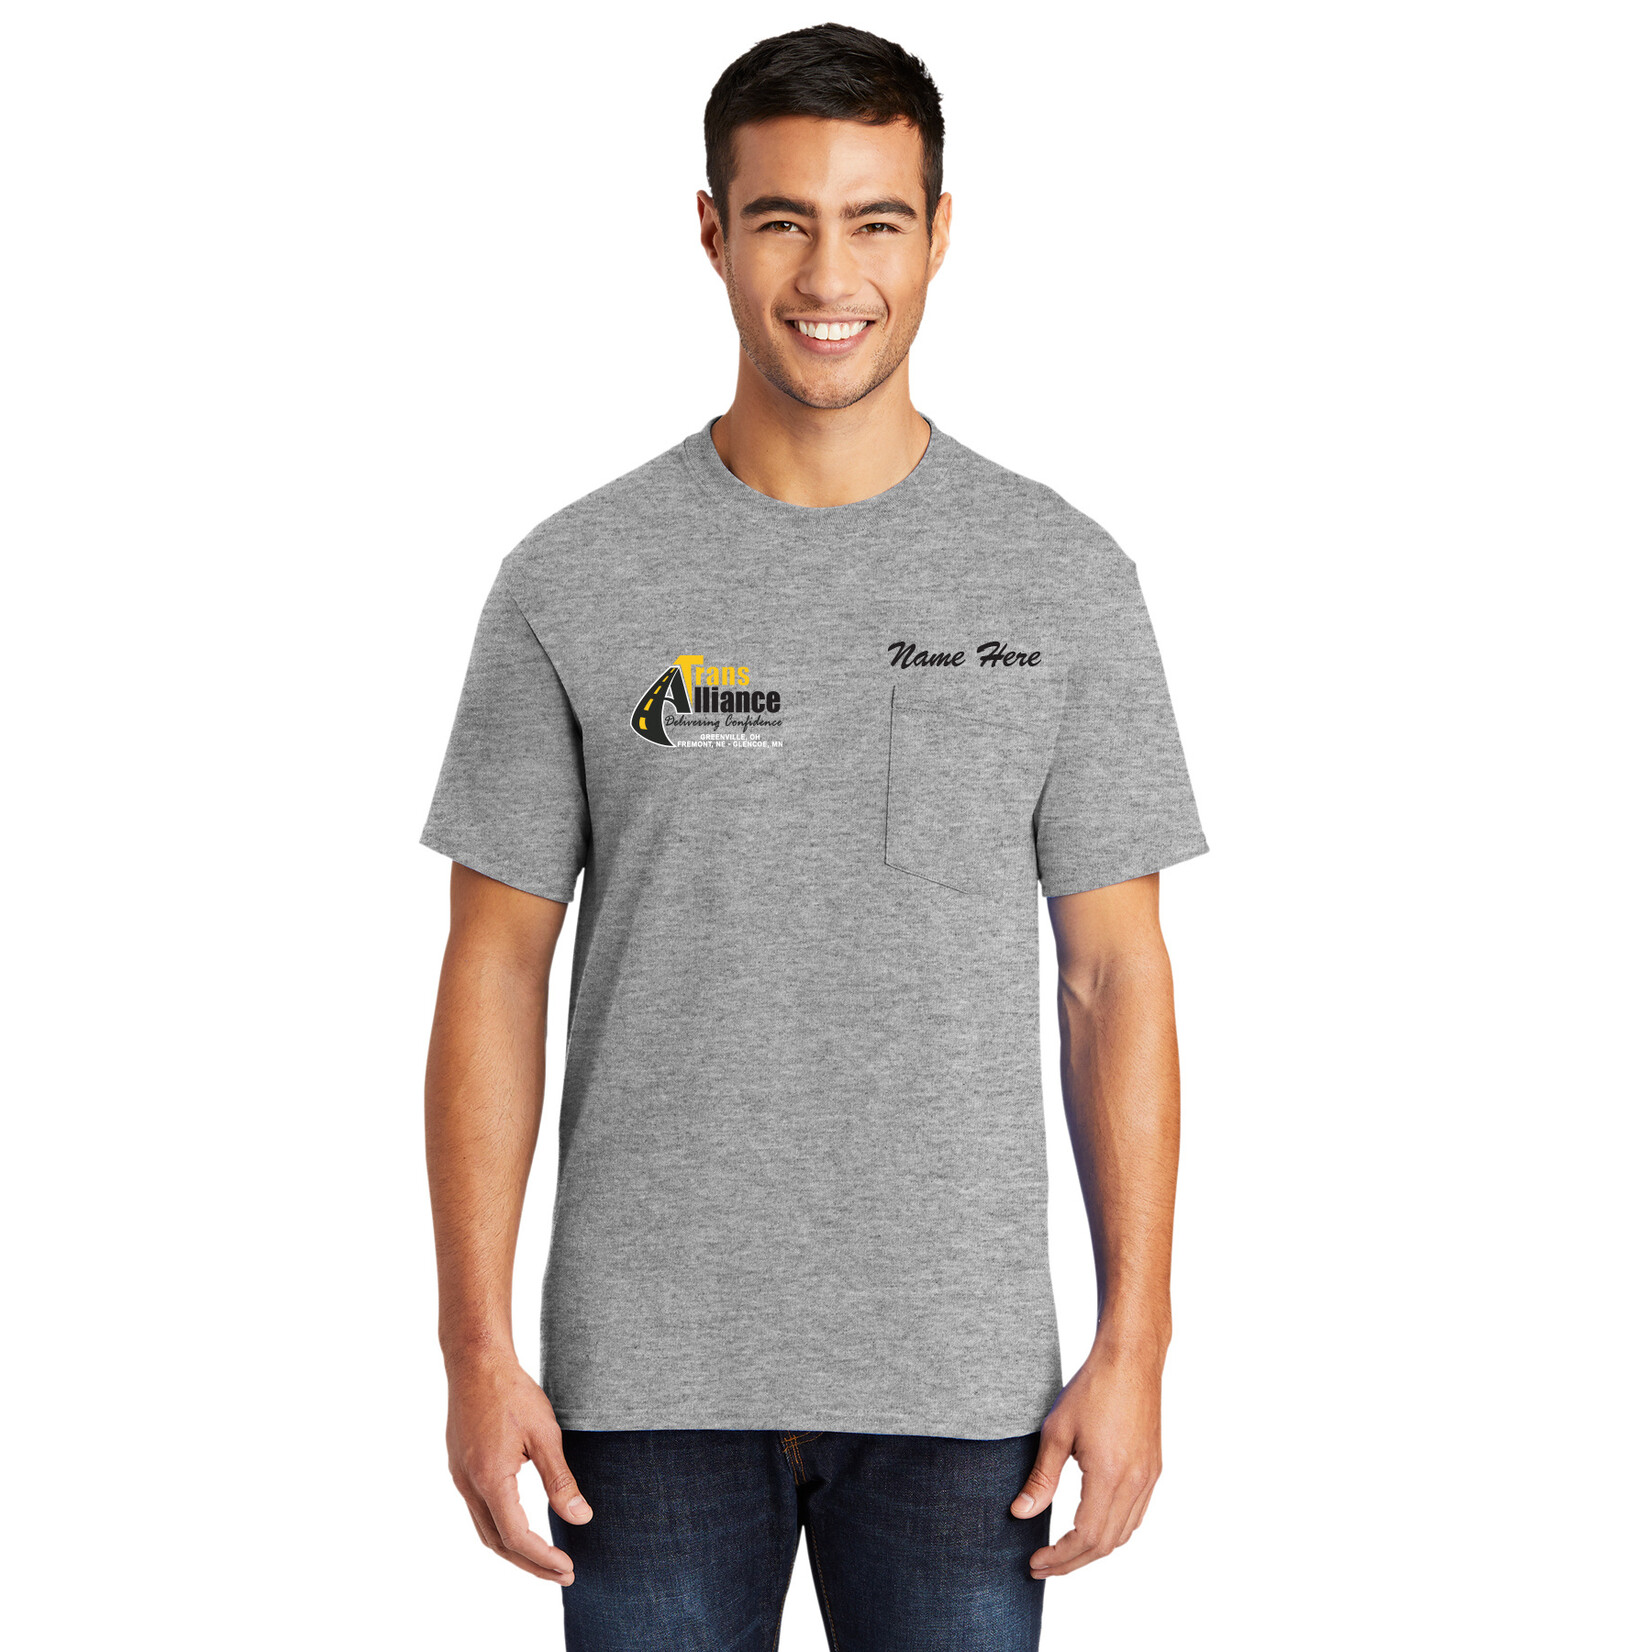 Trans Alliance_ TALL Pocket T-shirt